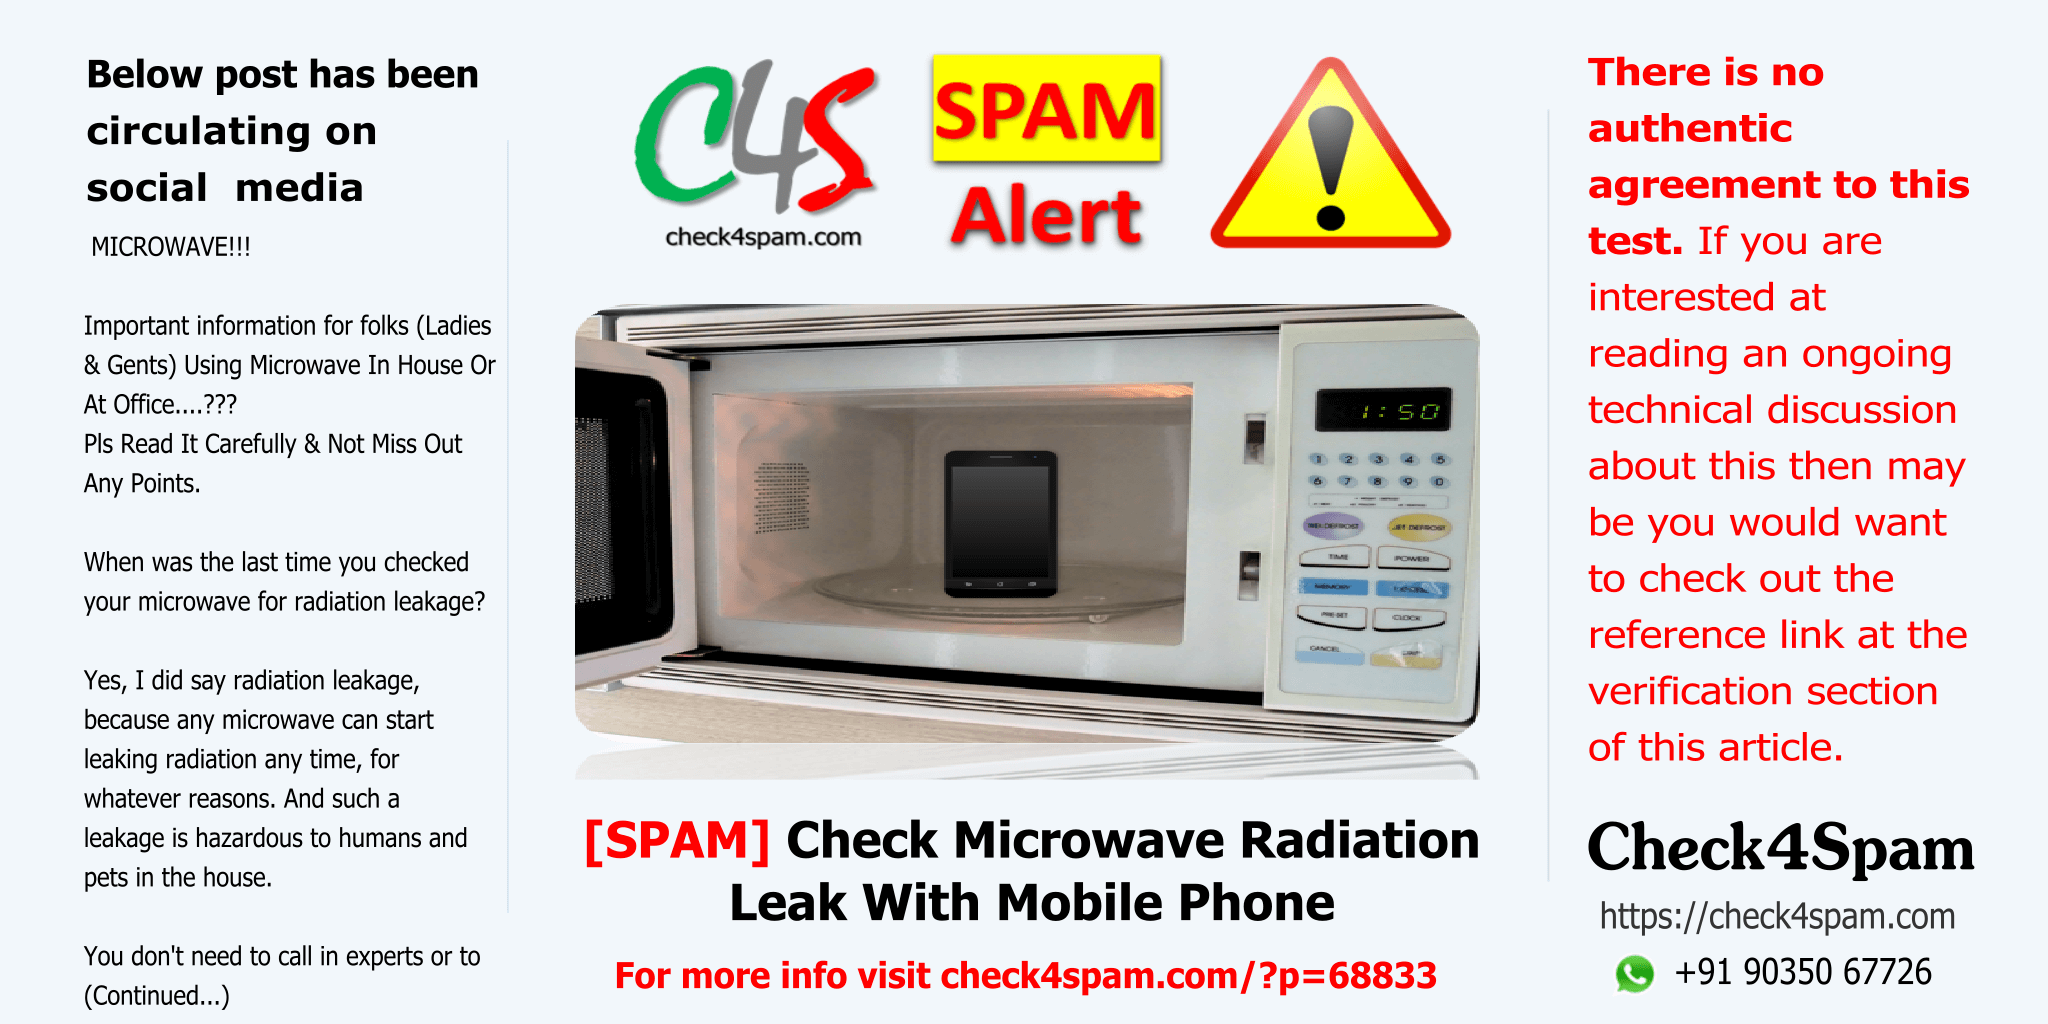 check microwave radiation leak mobile phone - SPAM